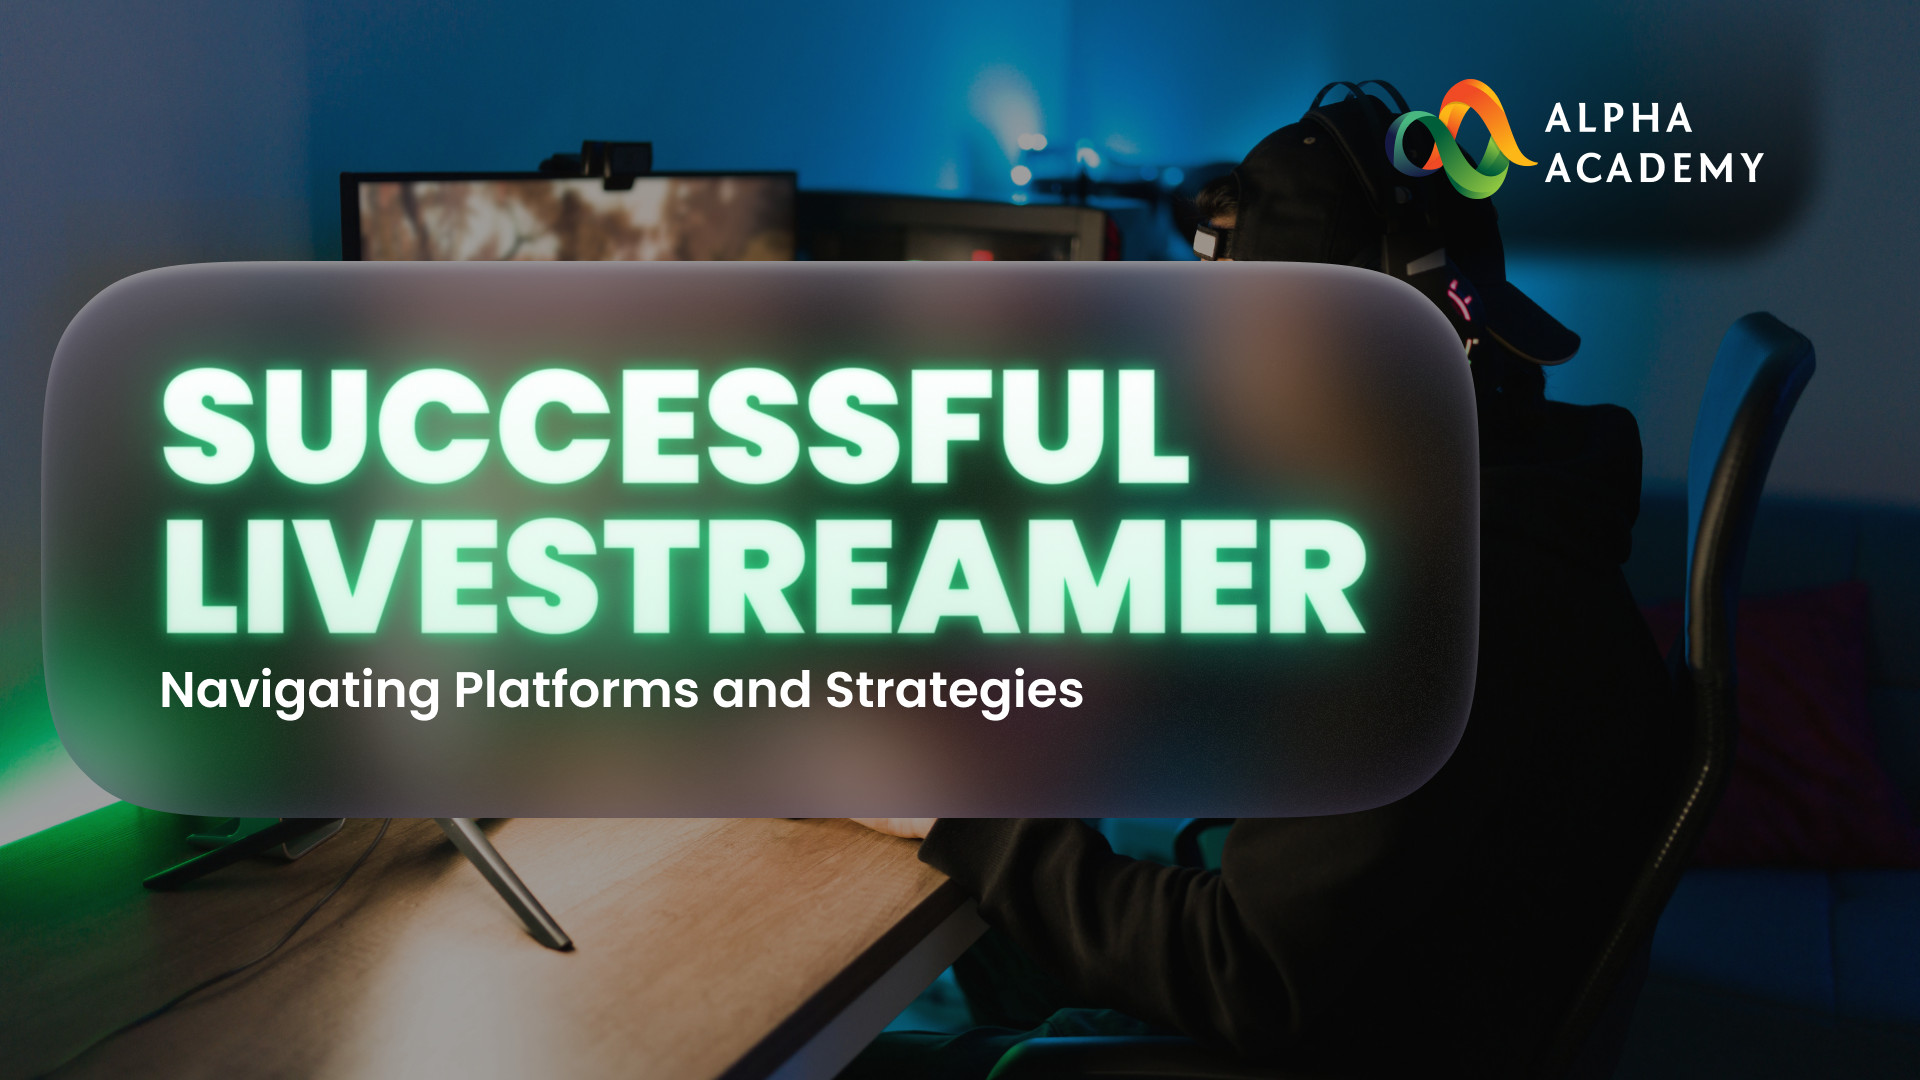 Successful Live streamer: Navigating Platforms and Strategies eLearning Bundle Alpha Academy Code 11.28 $